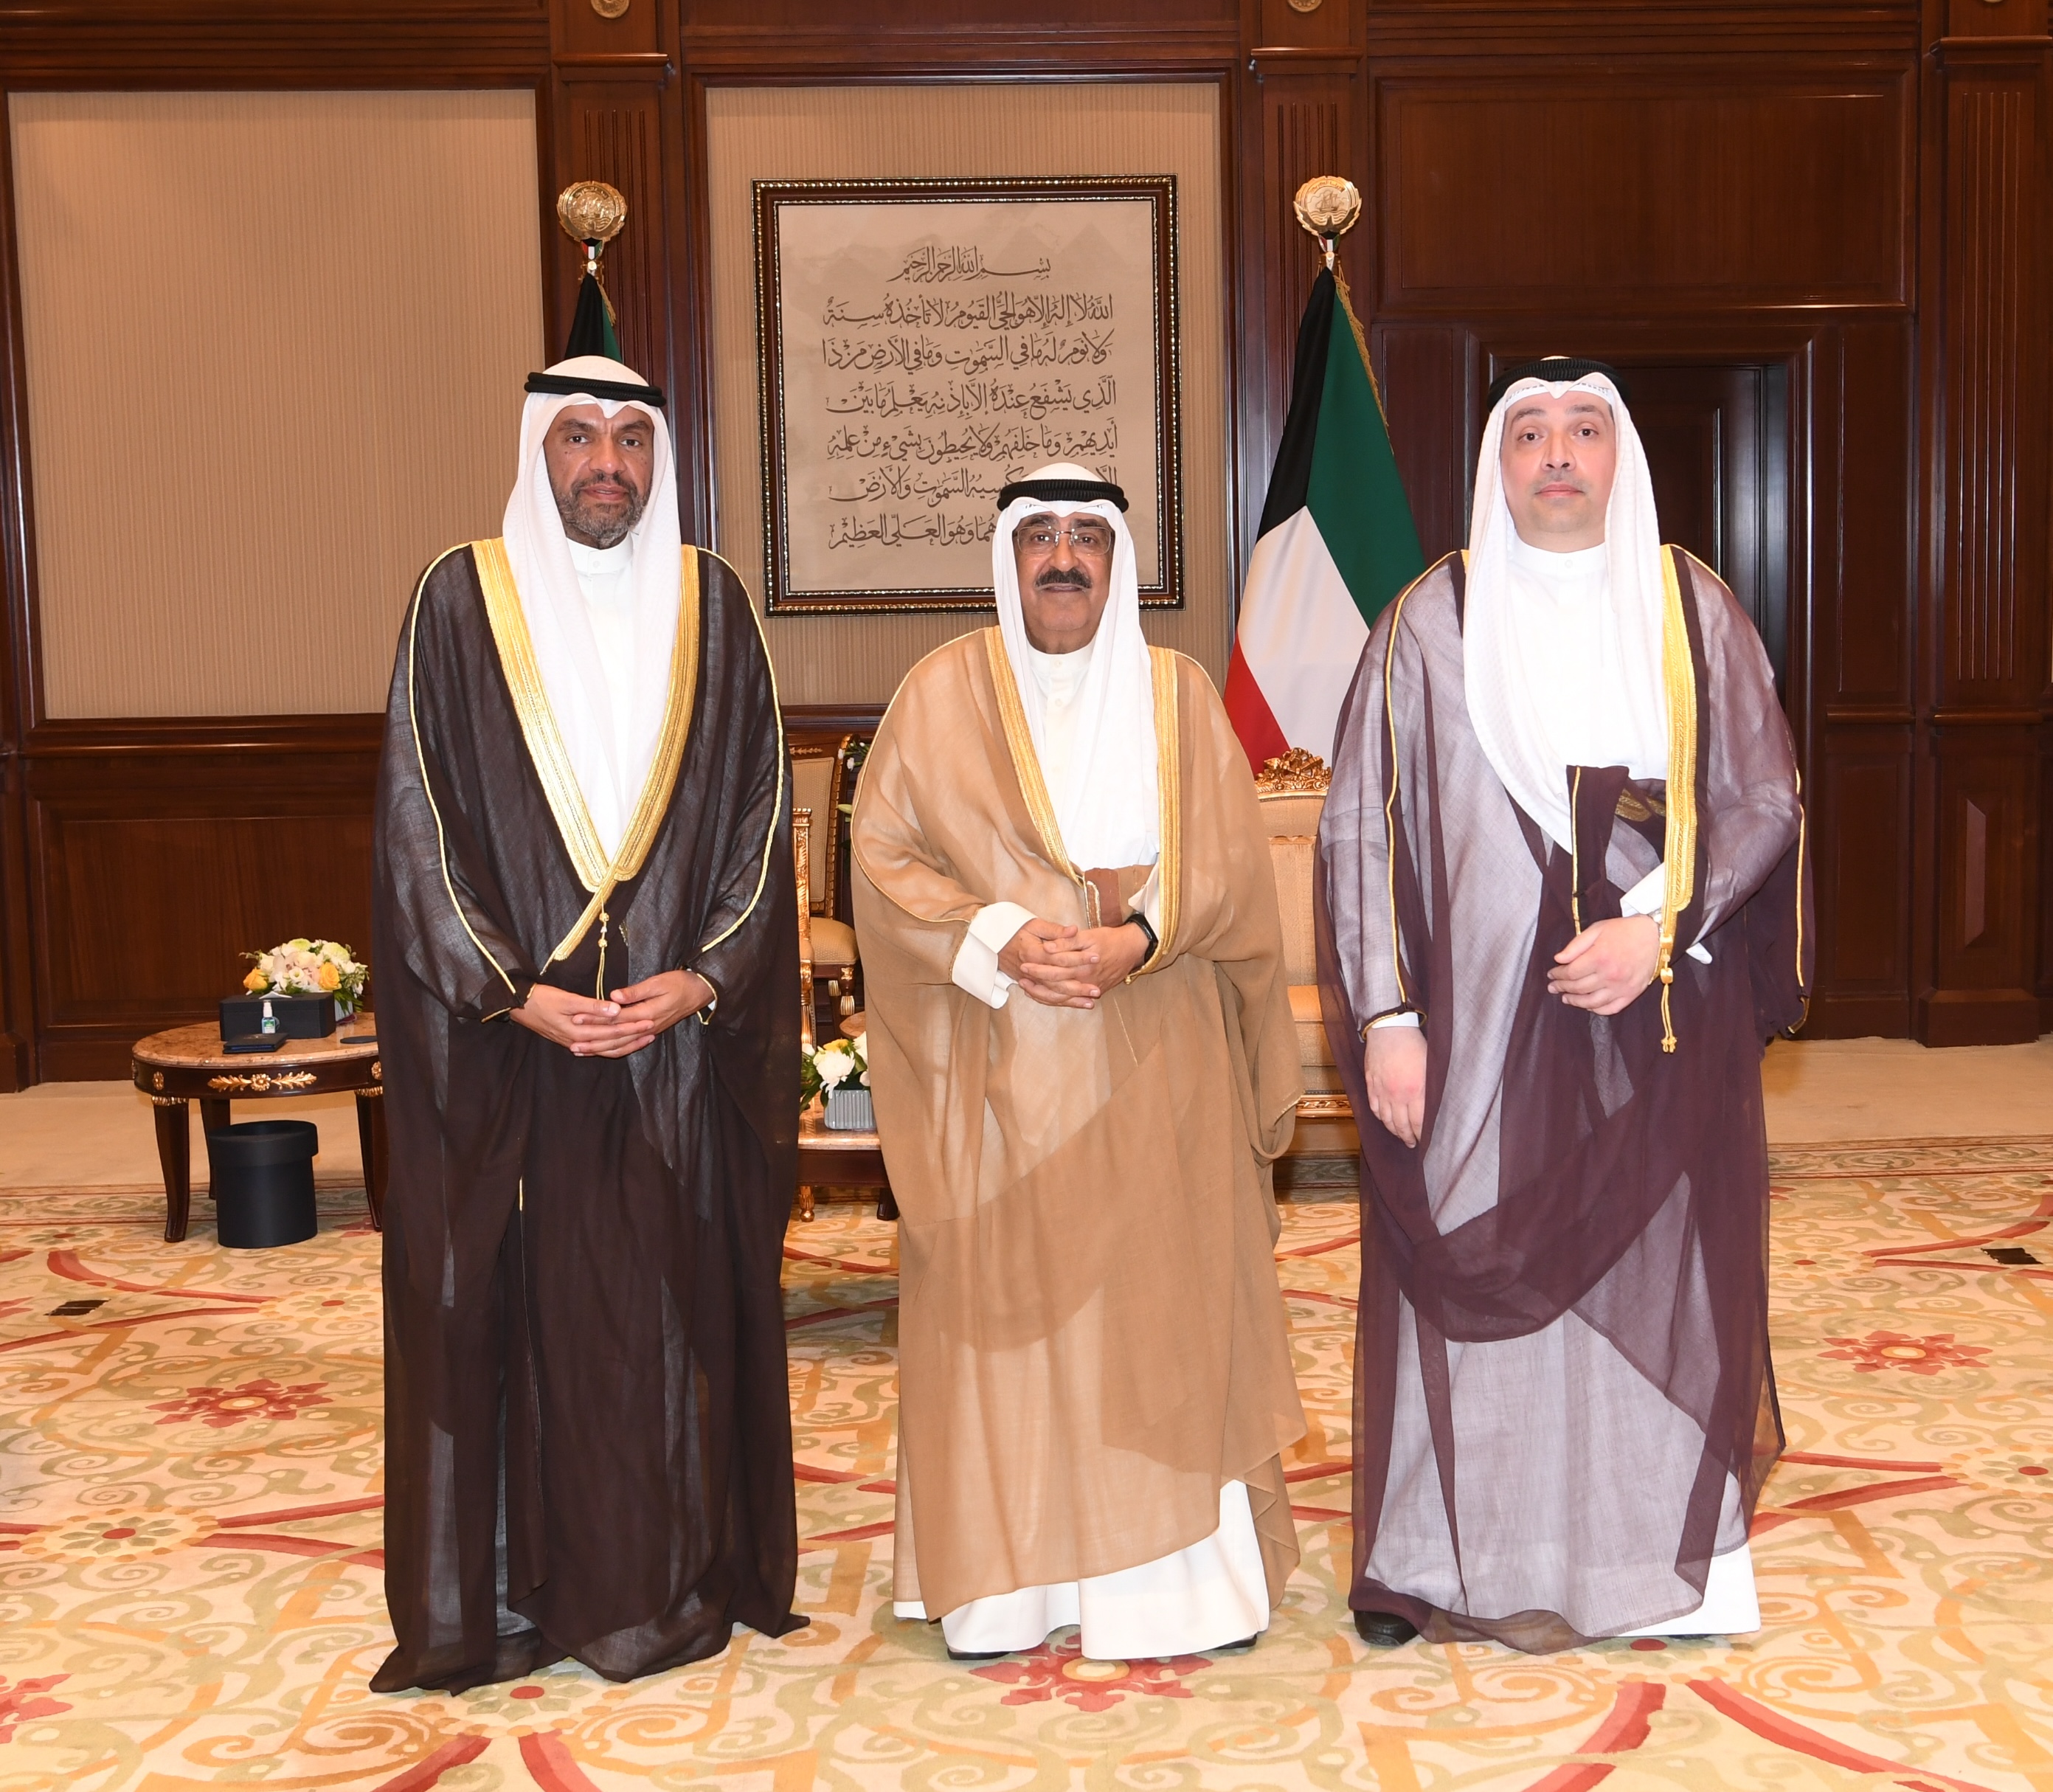 His Highness the Amir Sheikh Mishal Al-Ahmad Al-Jaber Al-Sabah receives Foreign Minister Abdulla Al-Yahya and the newly appointed Ambassador to Nigeria Salem Al-Muzain